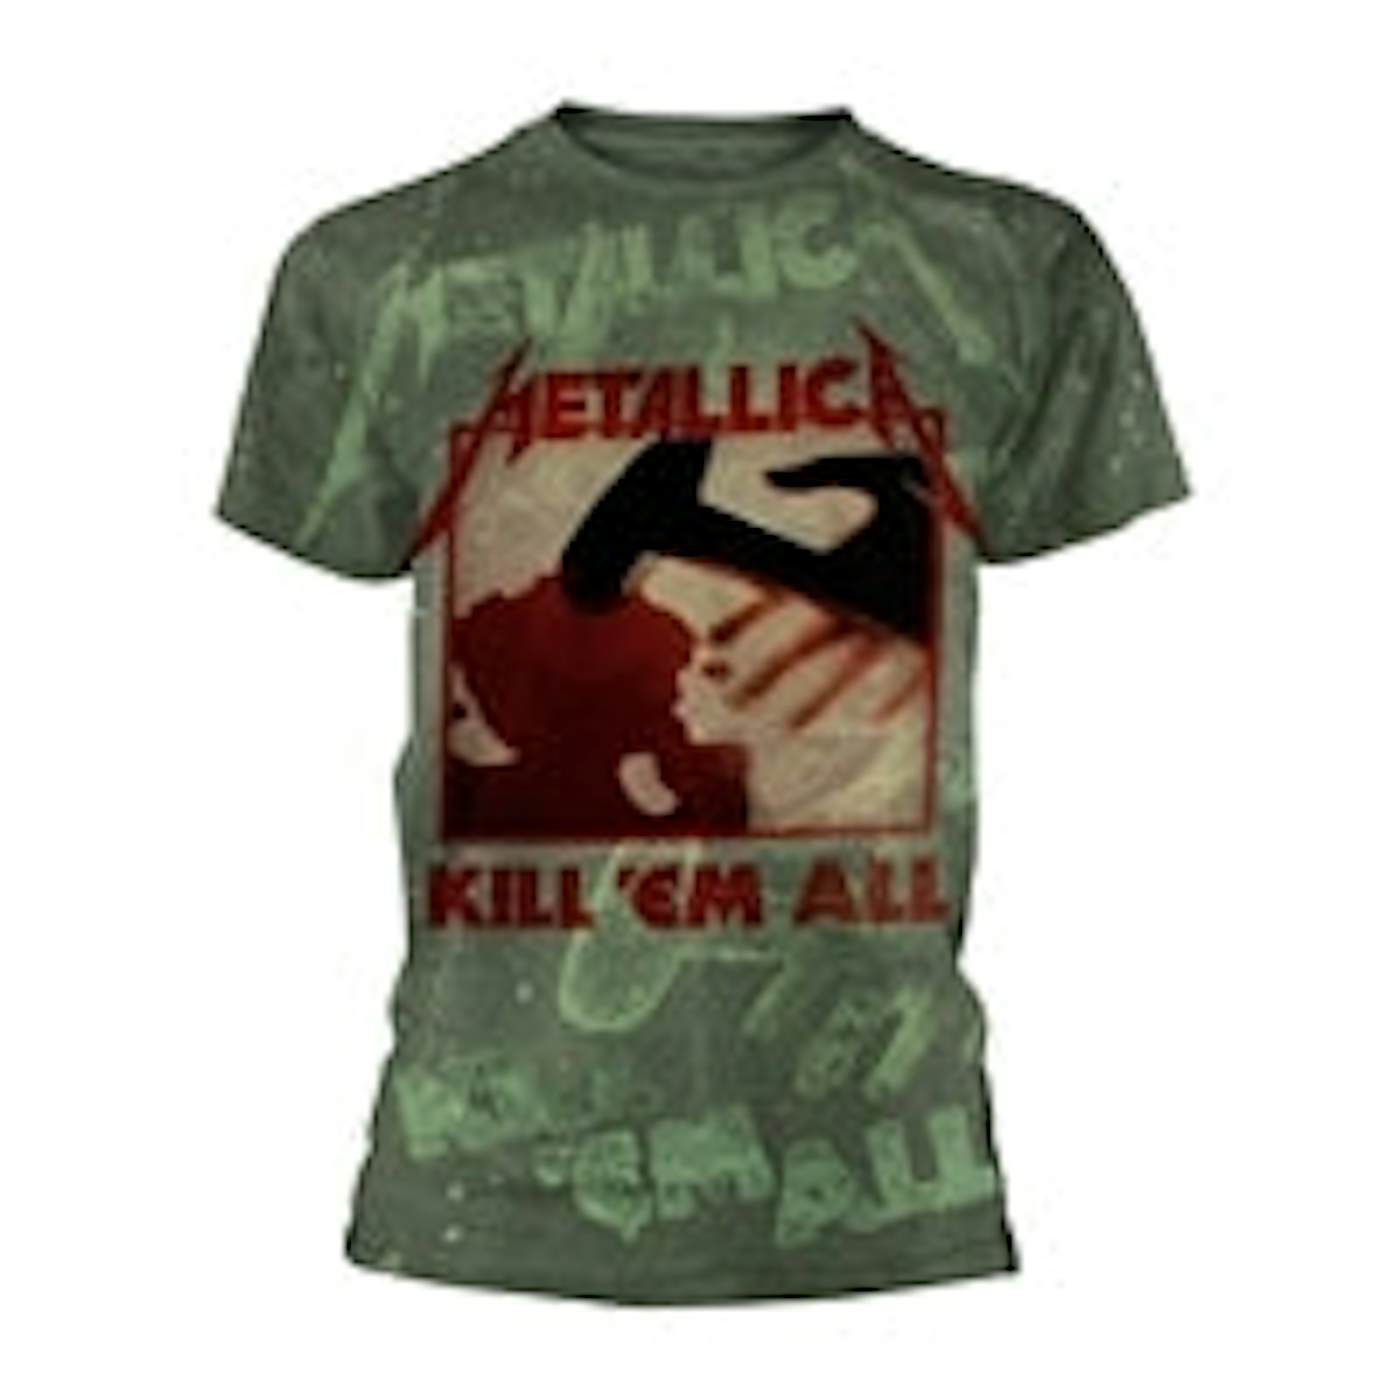 Metallica, METALLICA Kill Em All shirt TShirt or Longsleeve